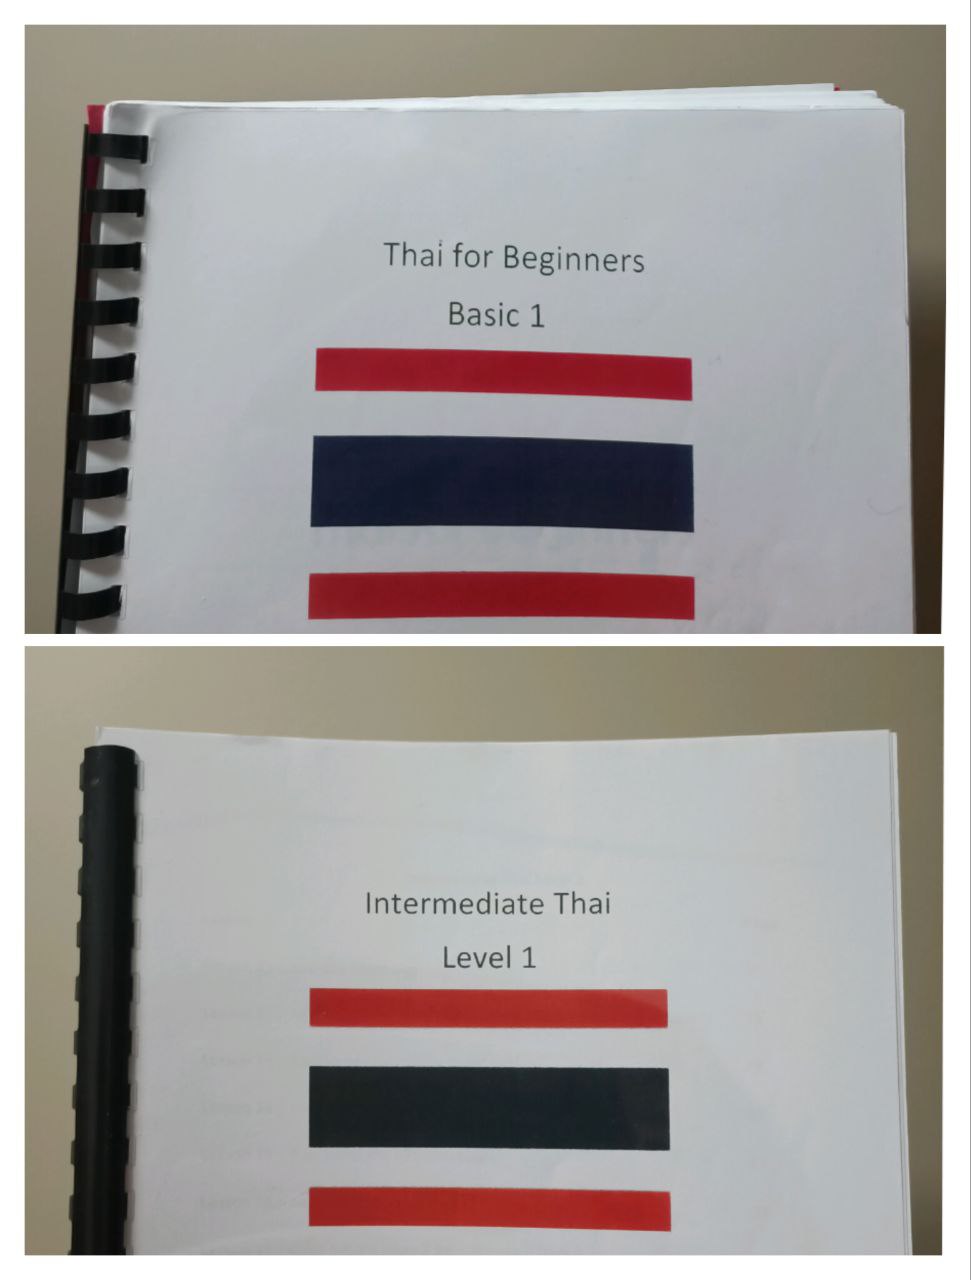 Thai textbook covers